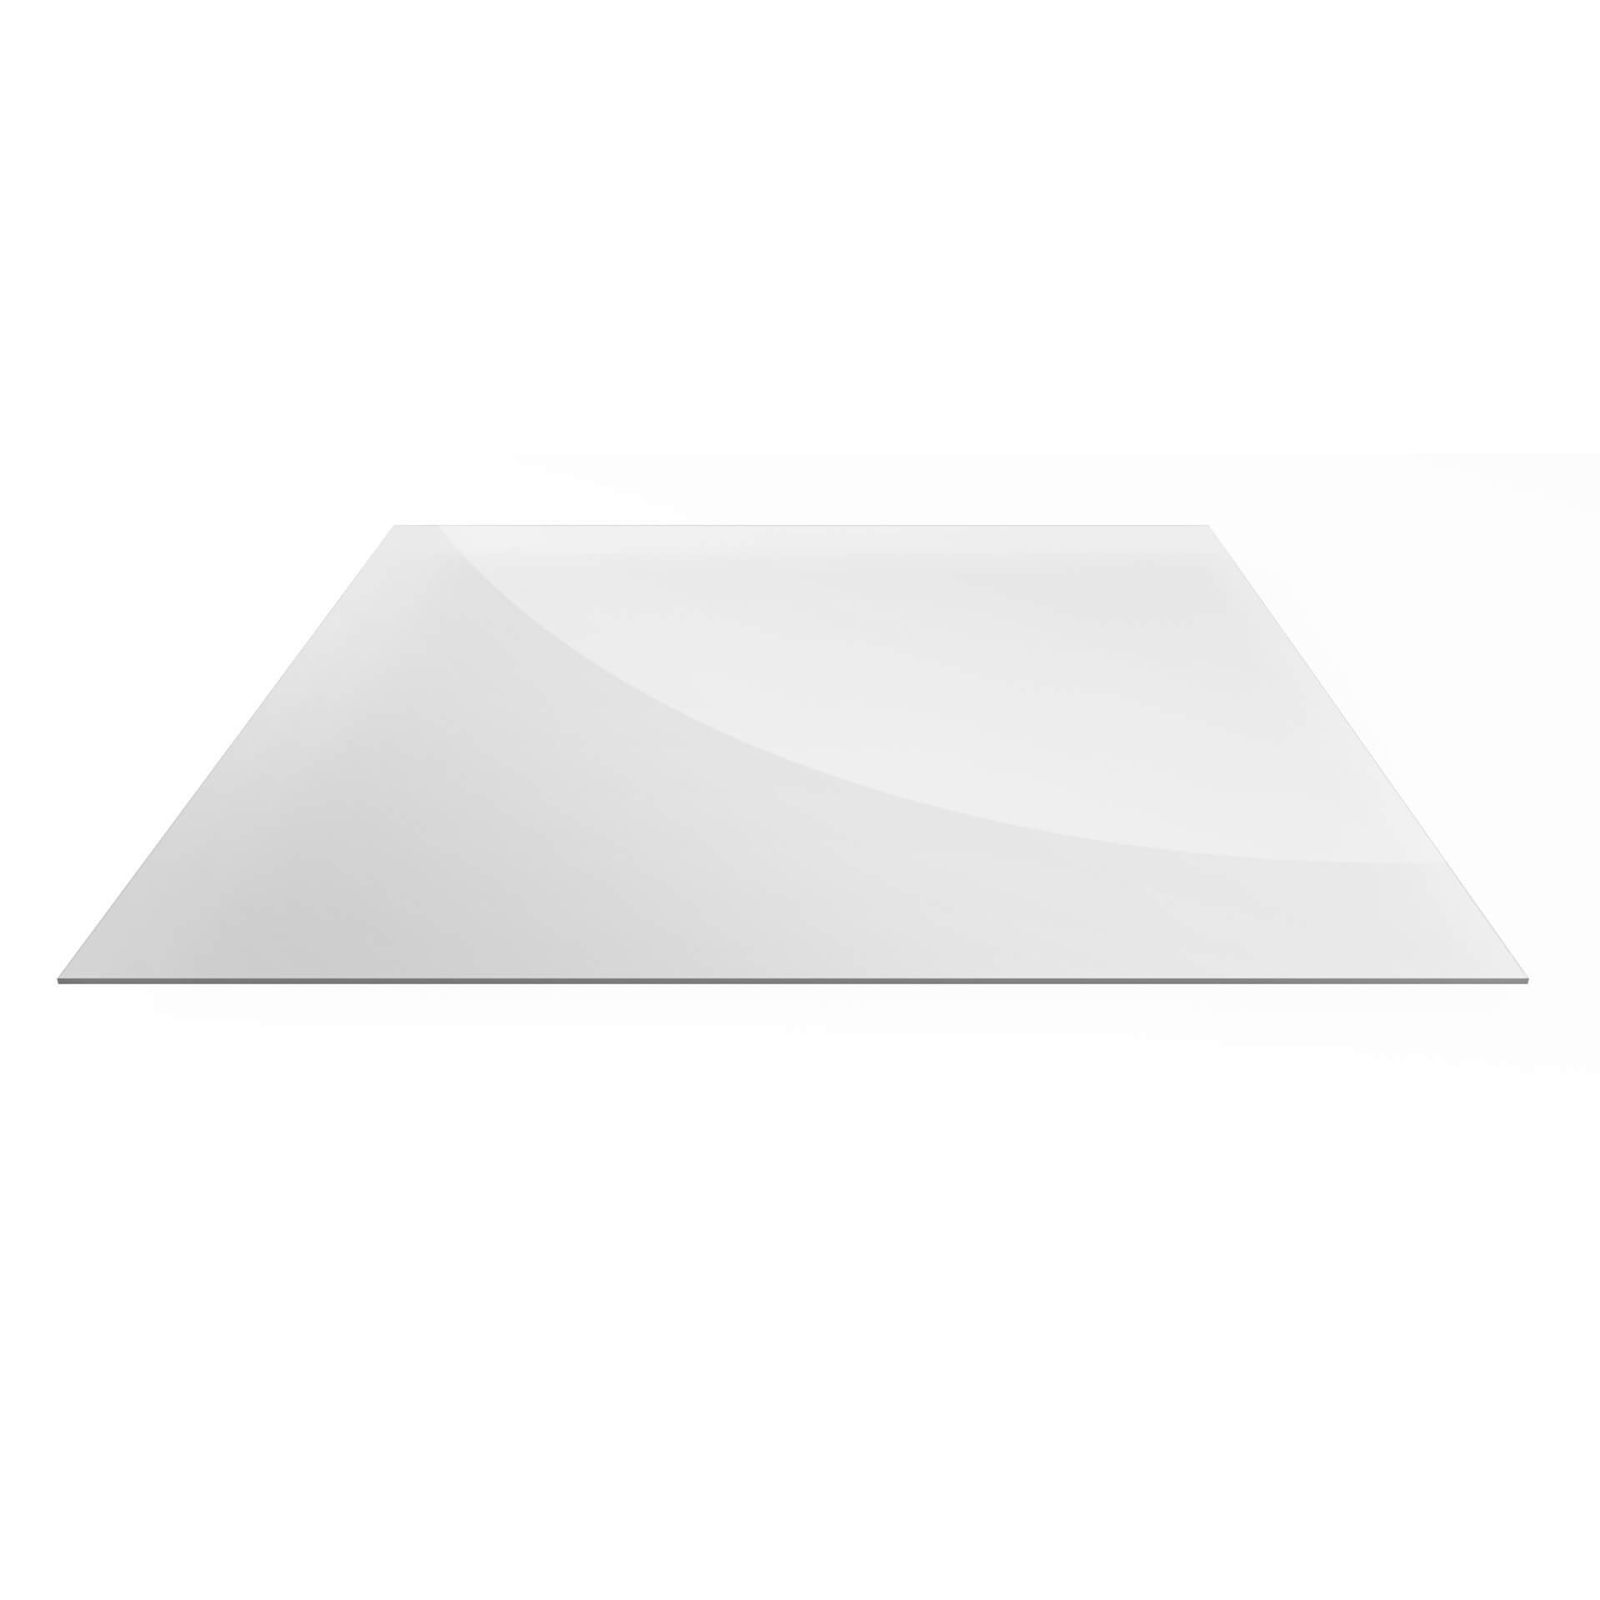 Polycarbonat Massivplatte | 8 mm | Glasklar | 1,00 x 1,00 m #1